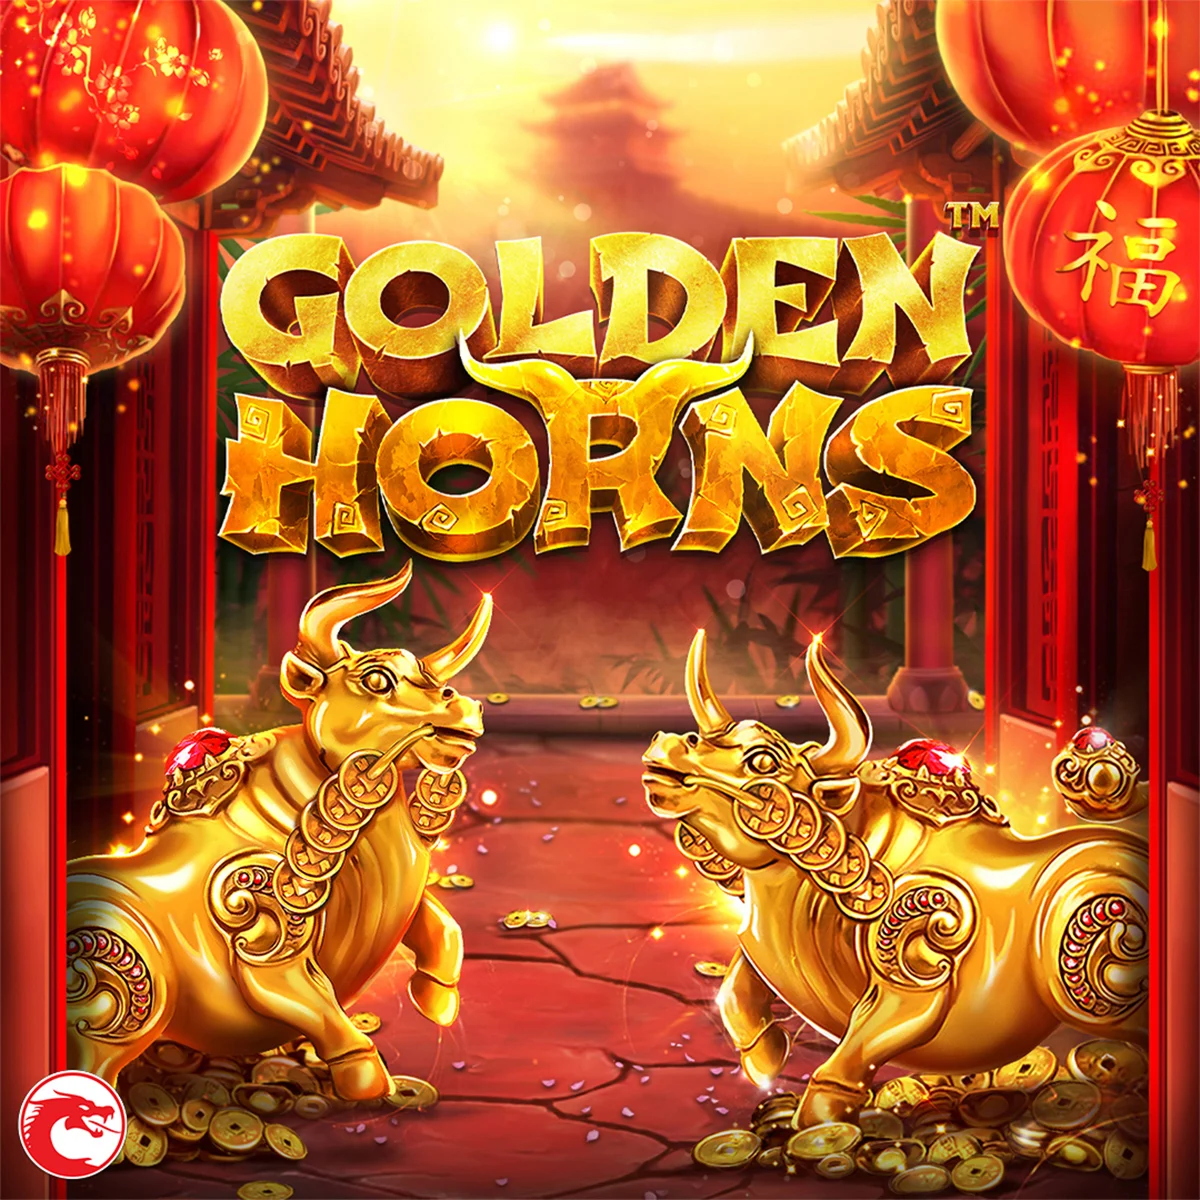 Play Golden Horns on Starcasinodice.be online casino